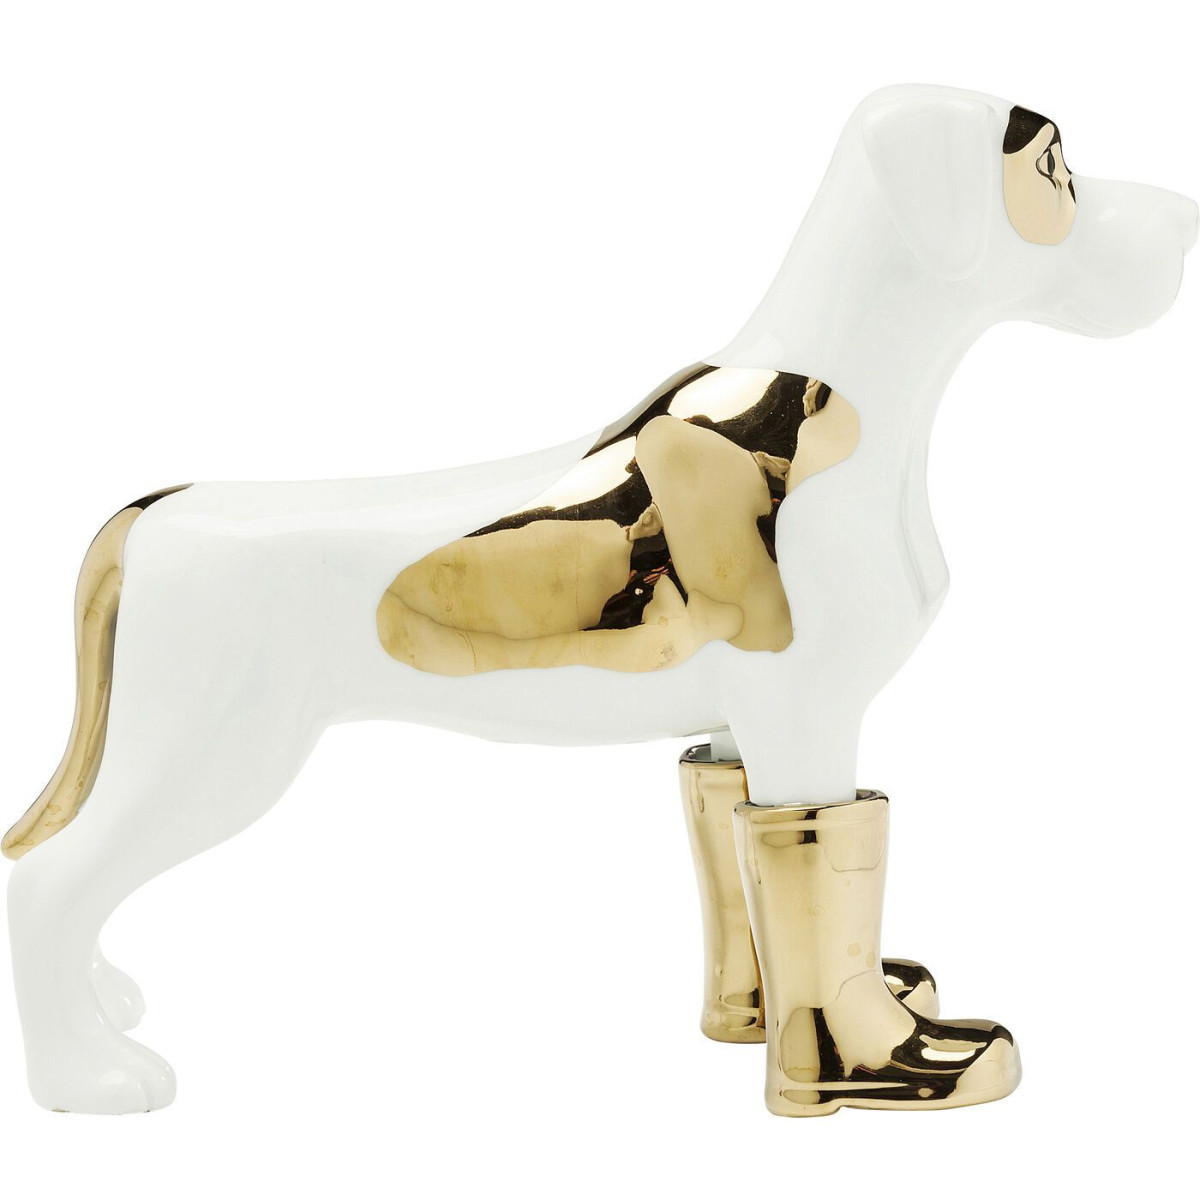 Статуэтка белая A dog in golden boots